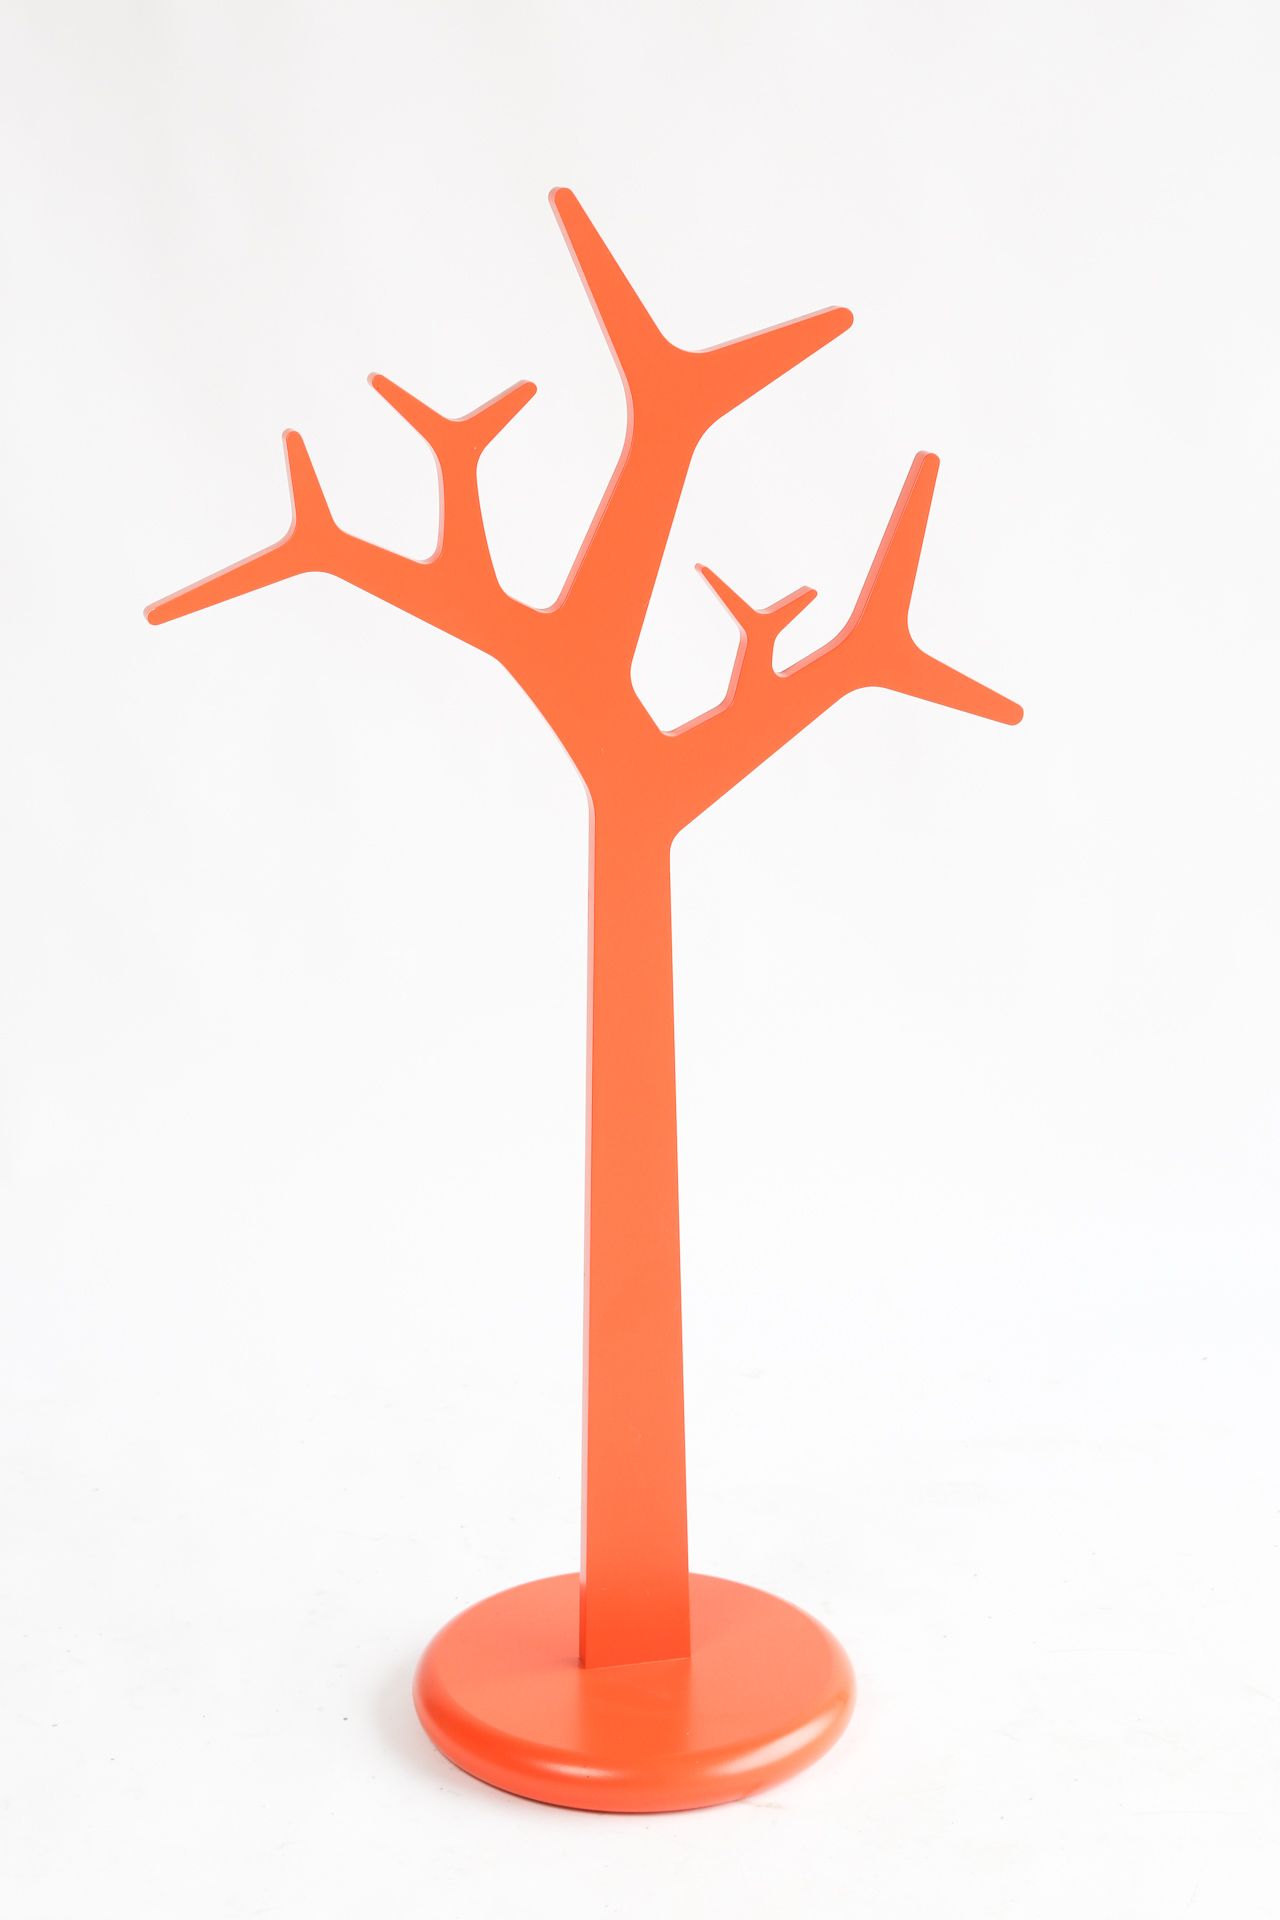 Null SWEDESE, Wandgarderobe Tree, weiß lackiert.

H: 134 cm, B: 77 cm